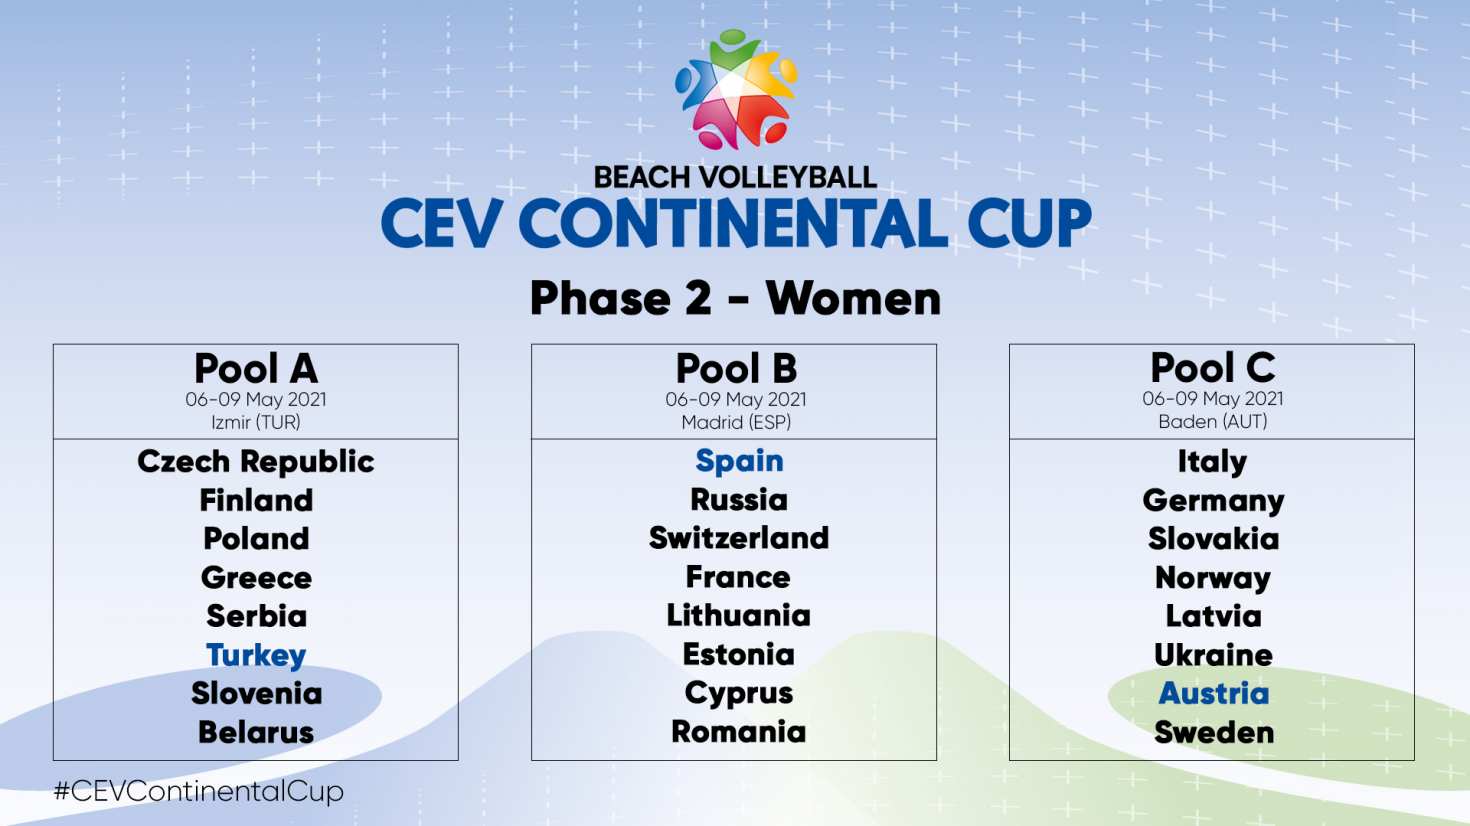 continentalcup phase2 women 5fc7b c 735x413@2x - DVV NOMINIERT TEAMS FÜR CONTINENTAL CUP